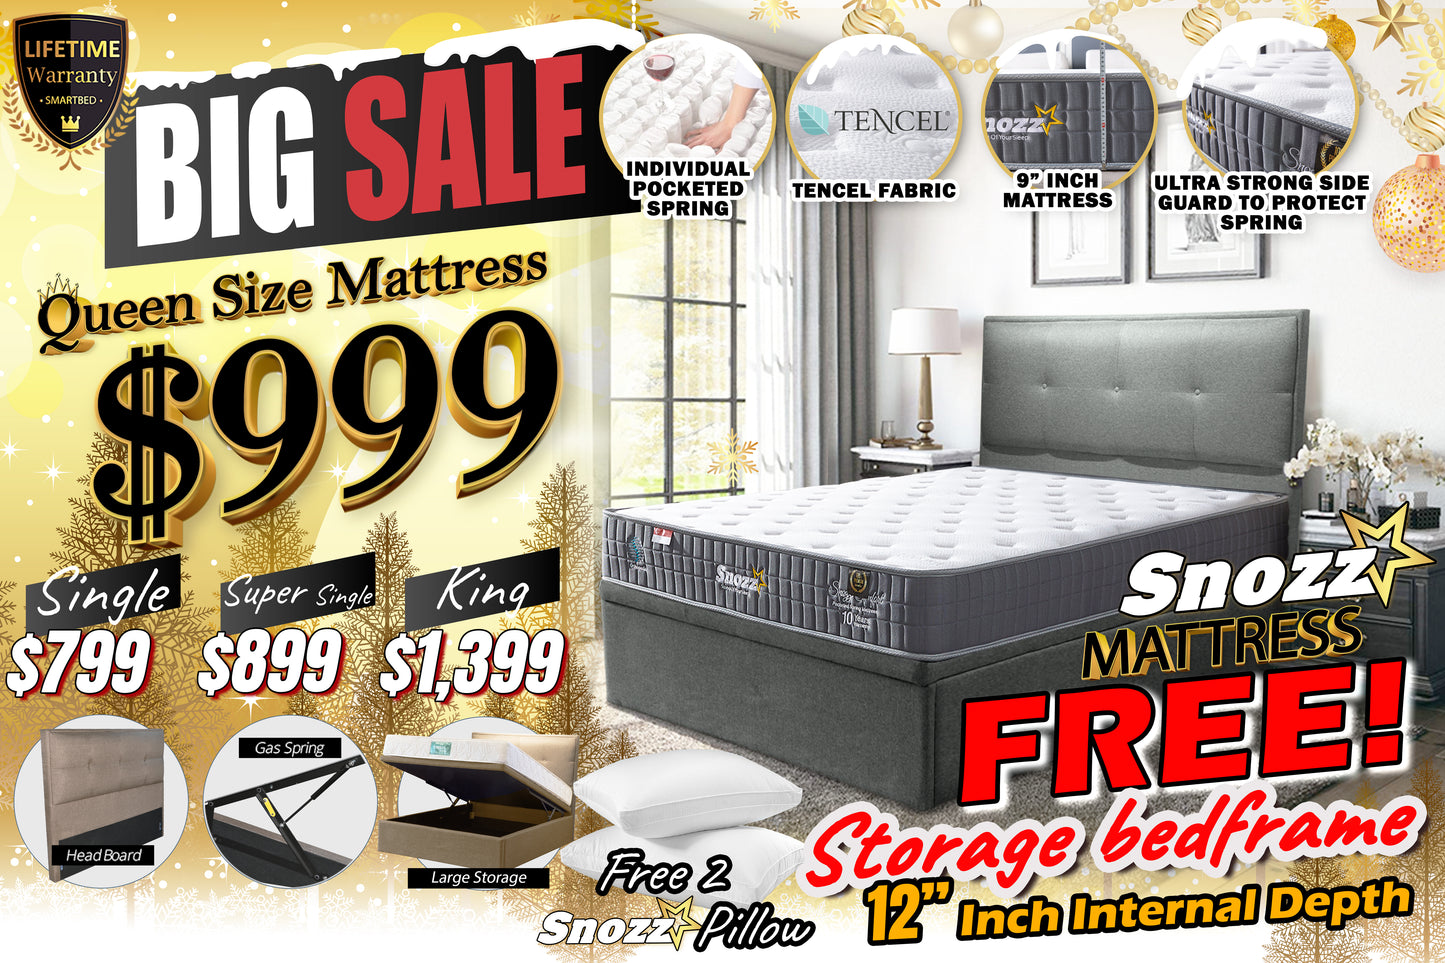 Snozz Mattress with FREE Storage Bedframe